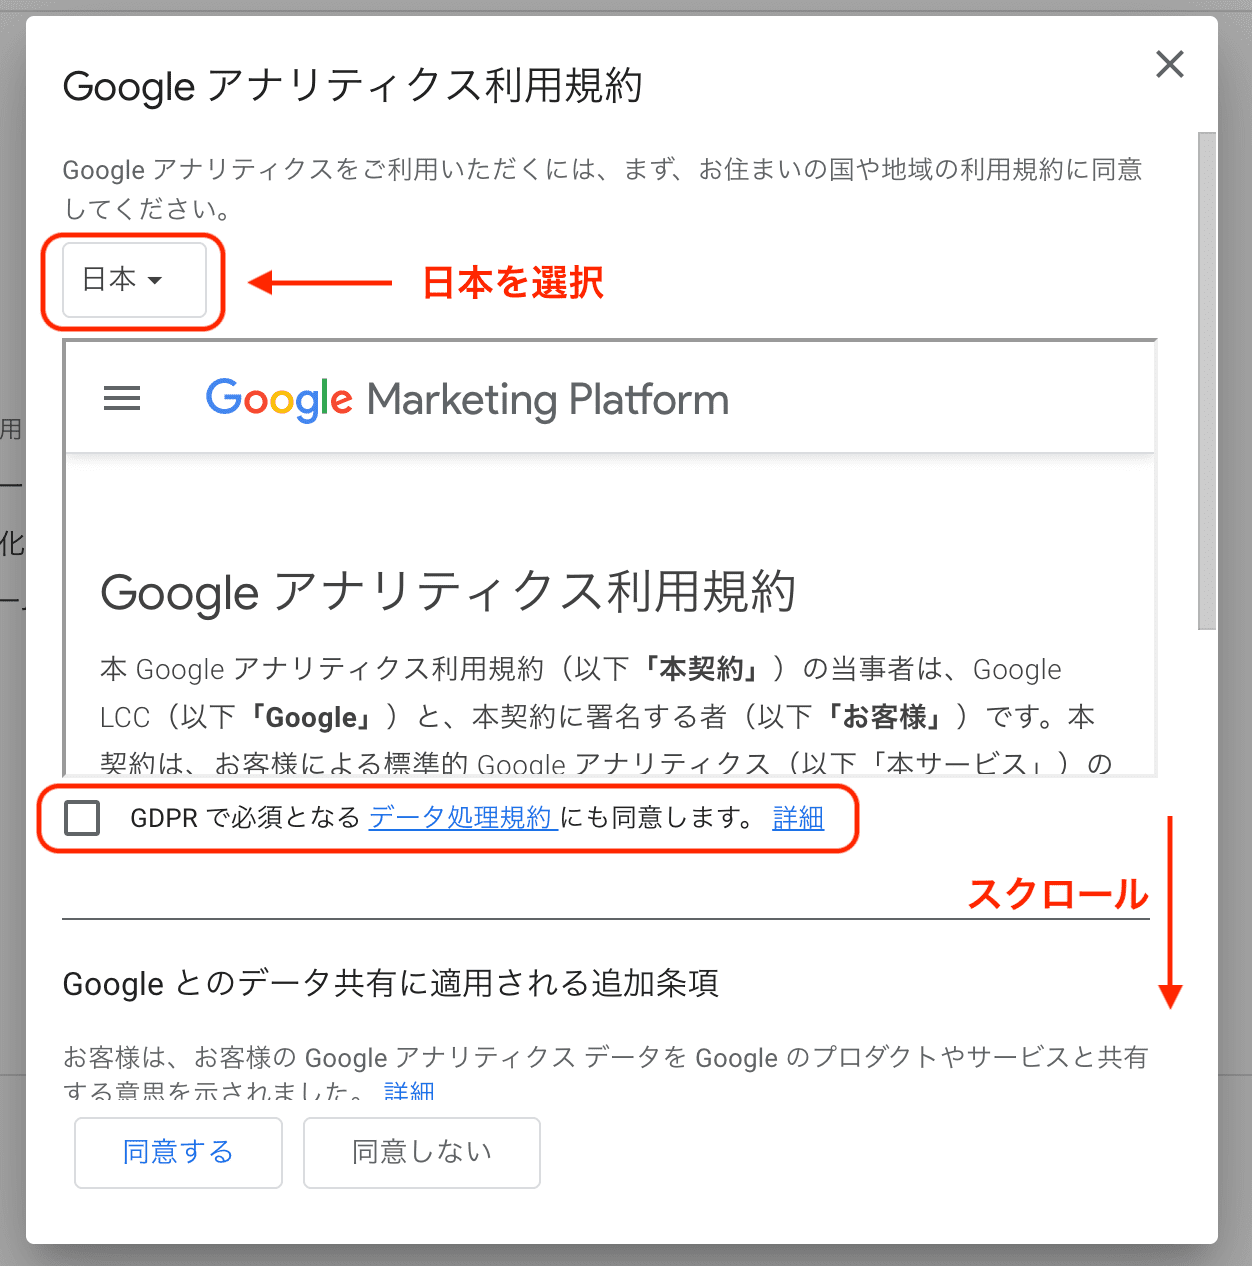 「Googleアナリティクス利用規約」の言語を日本語に選択後2つのチェックボックスを選択